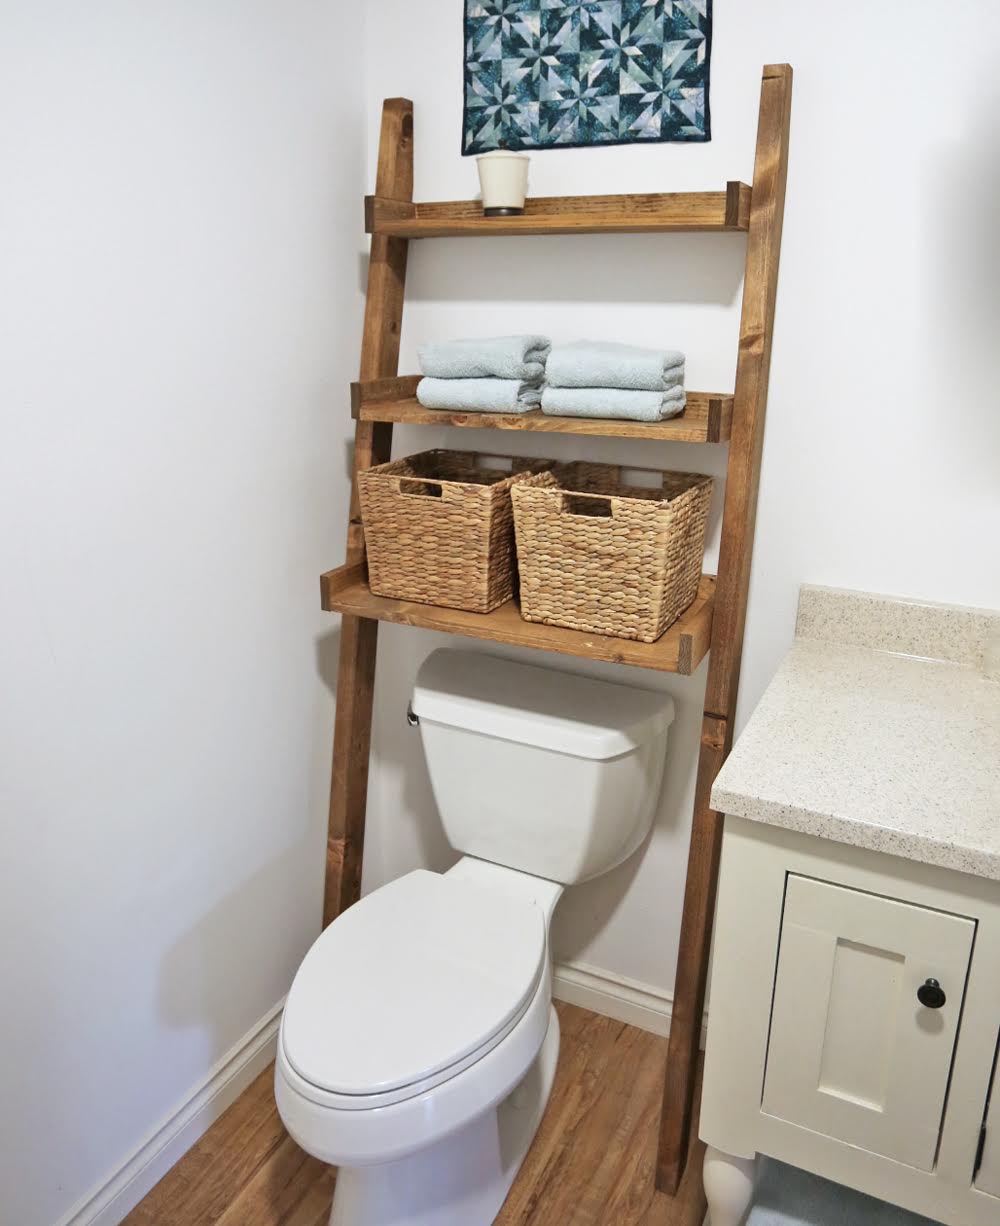 13 DIY Built In Shelving for The Bathroom